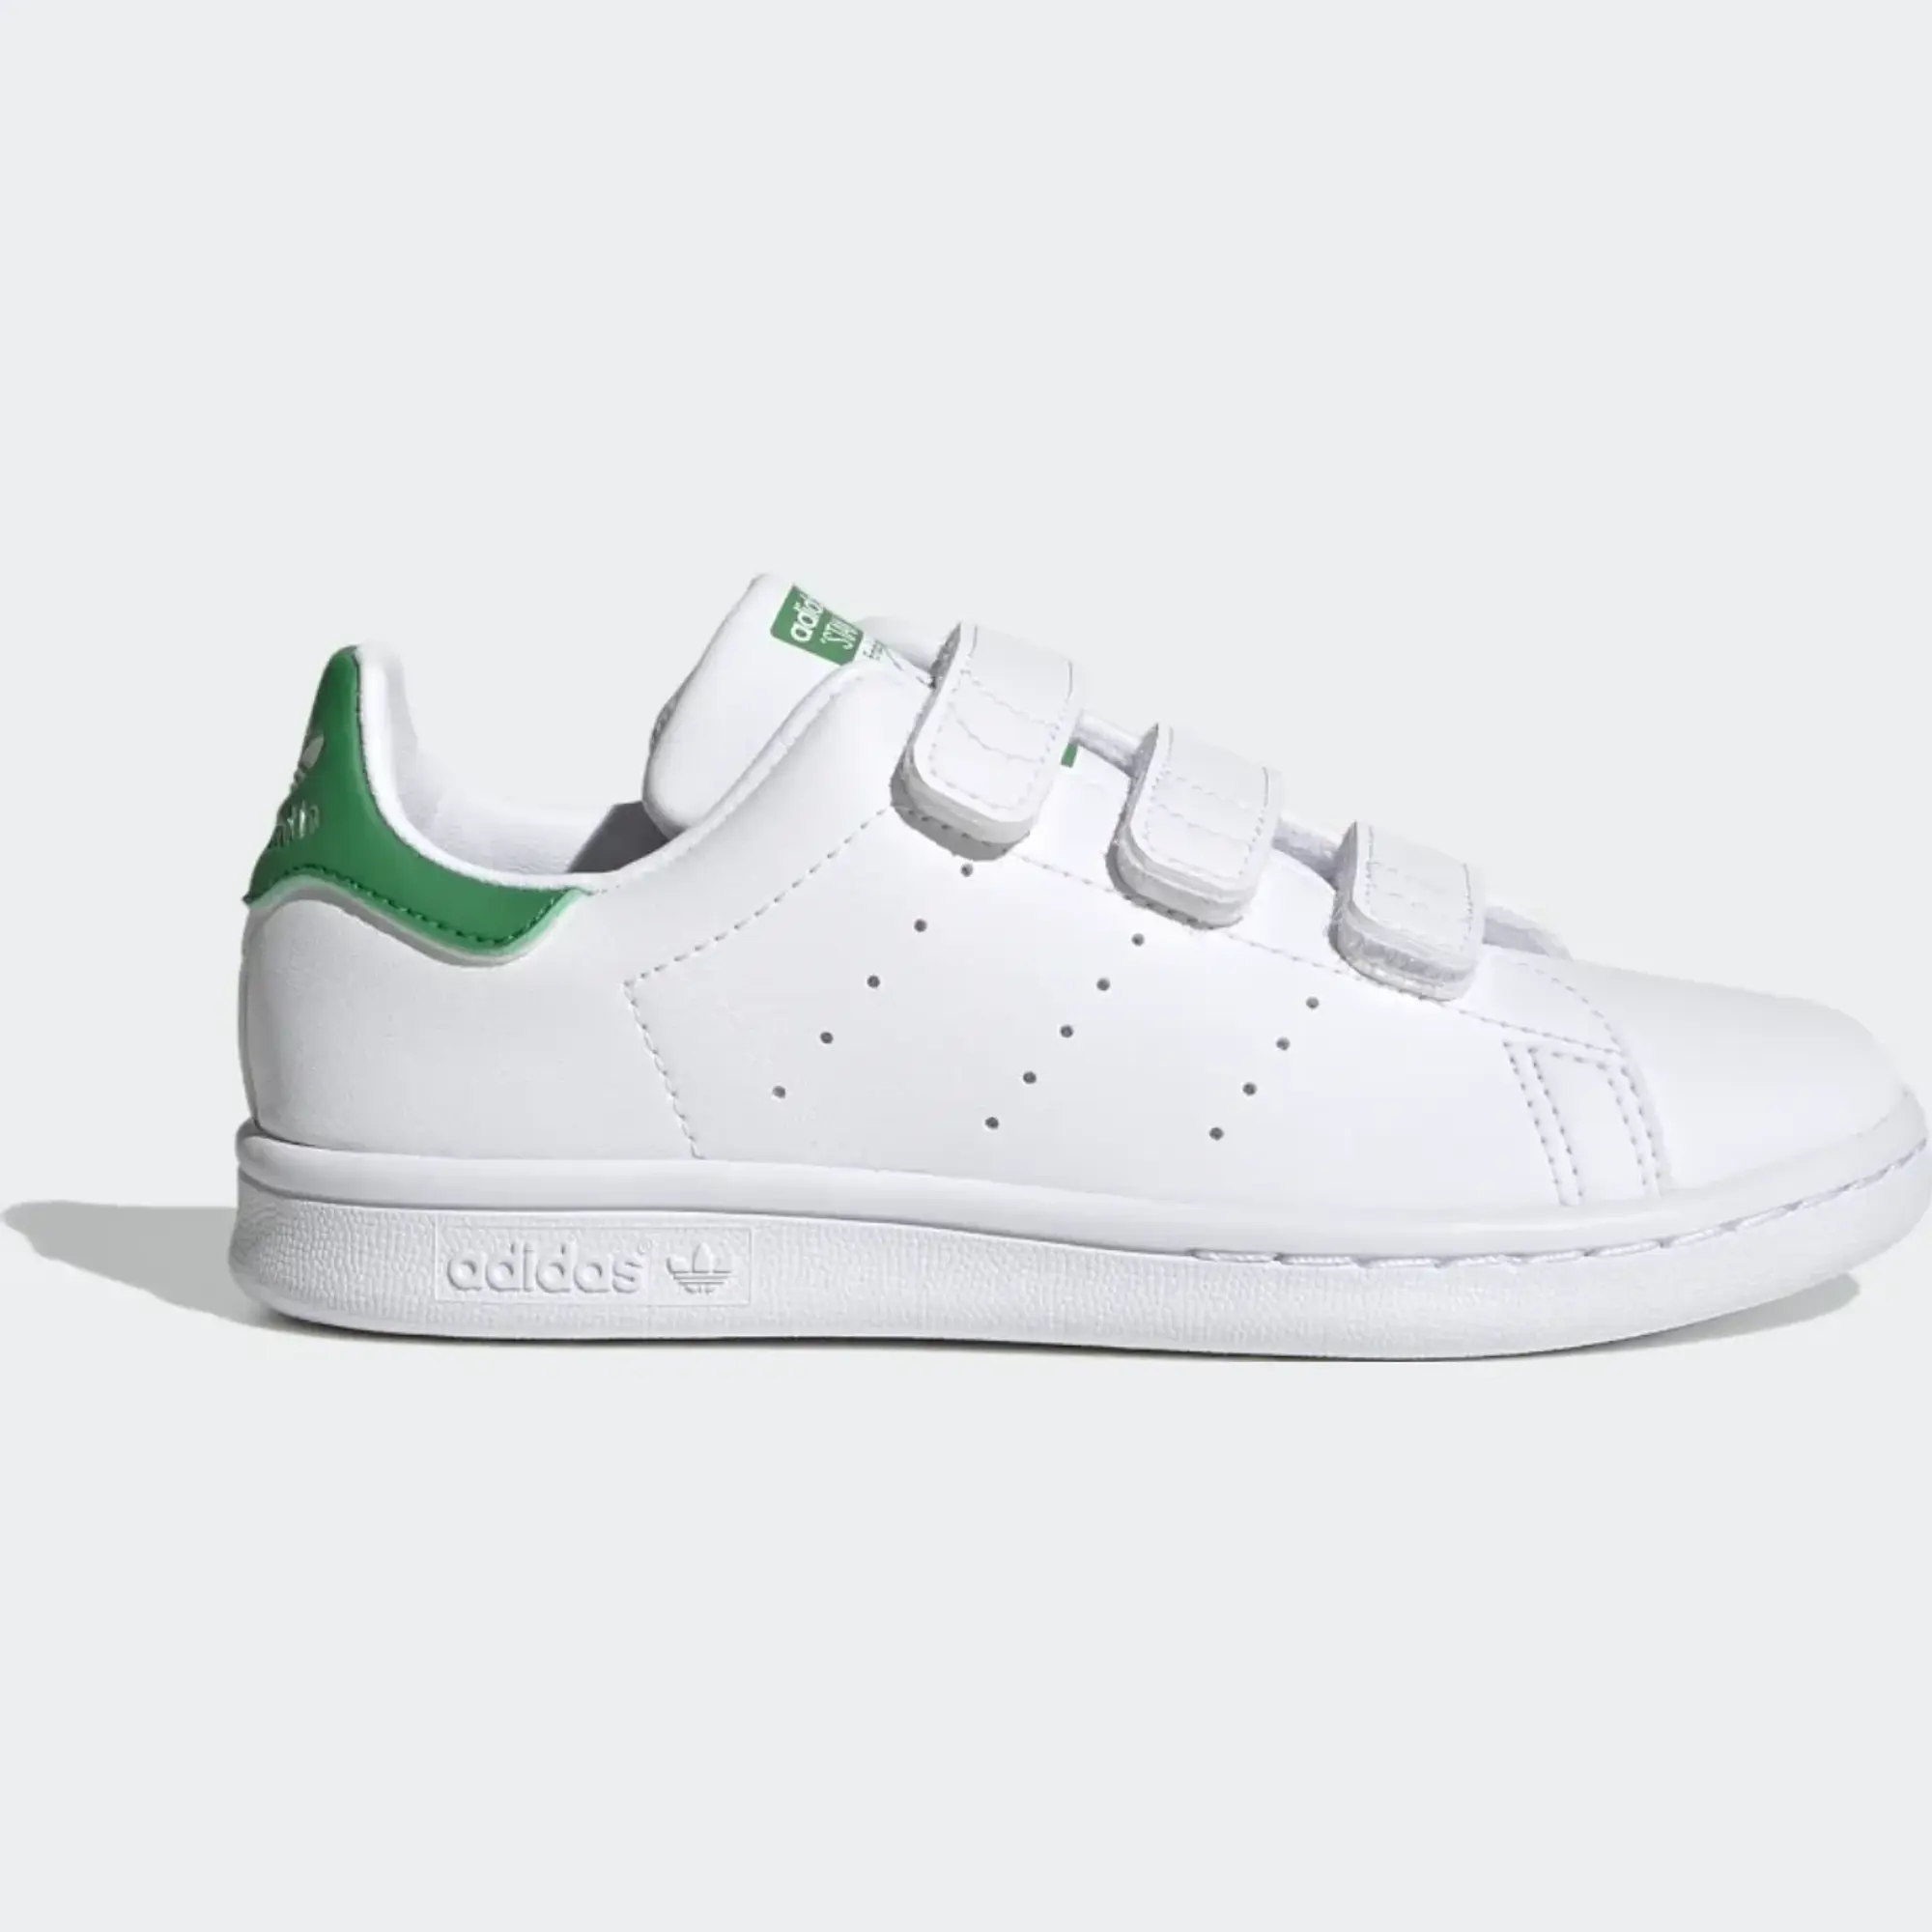 adidas Originals Unisex Kids Stan Smith Trainers - White/Green, White/Green